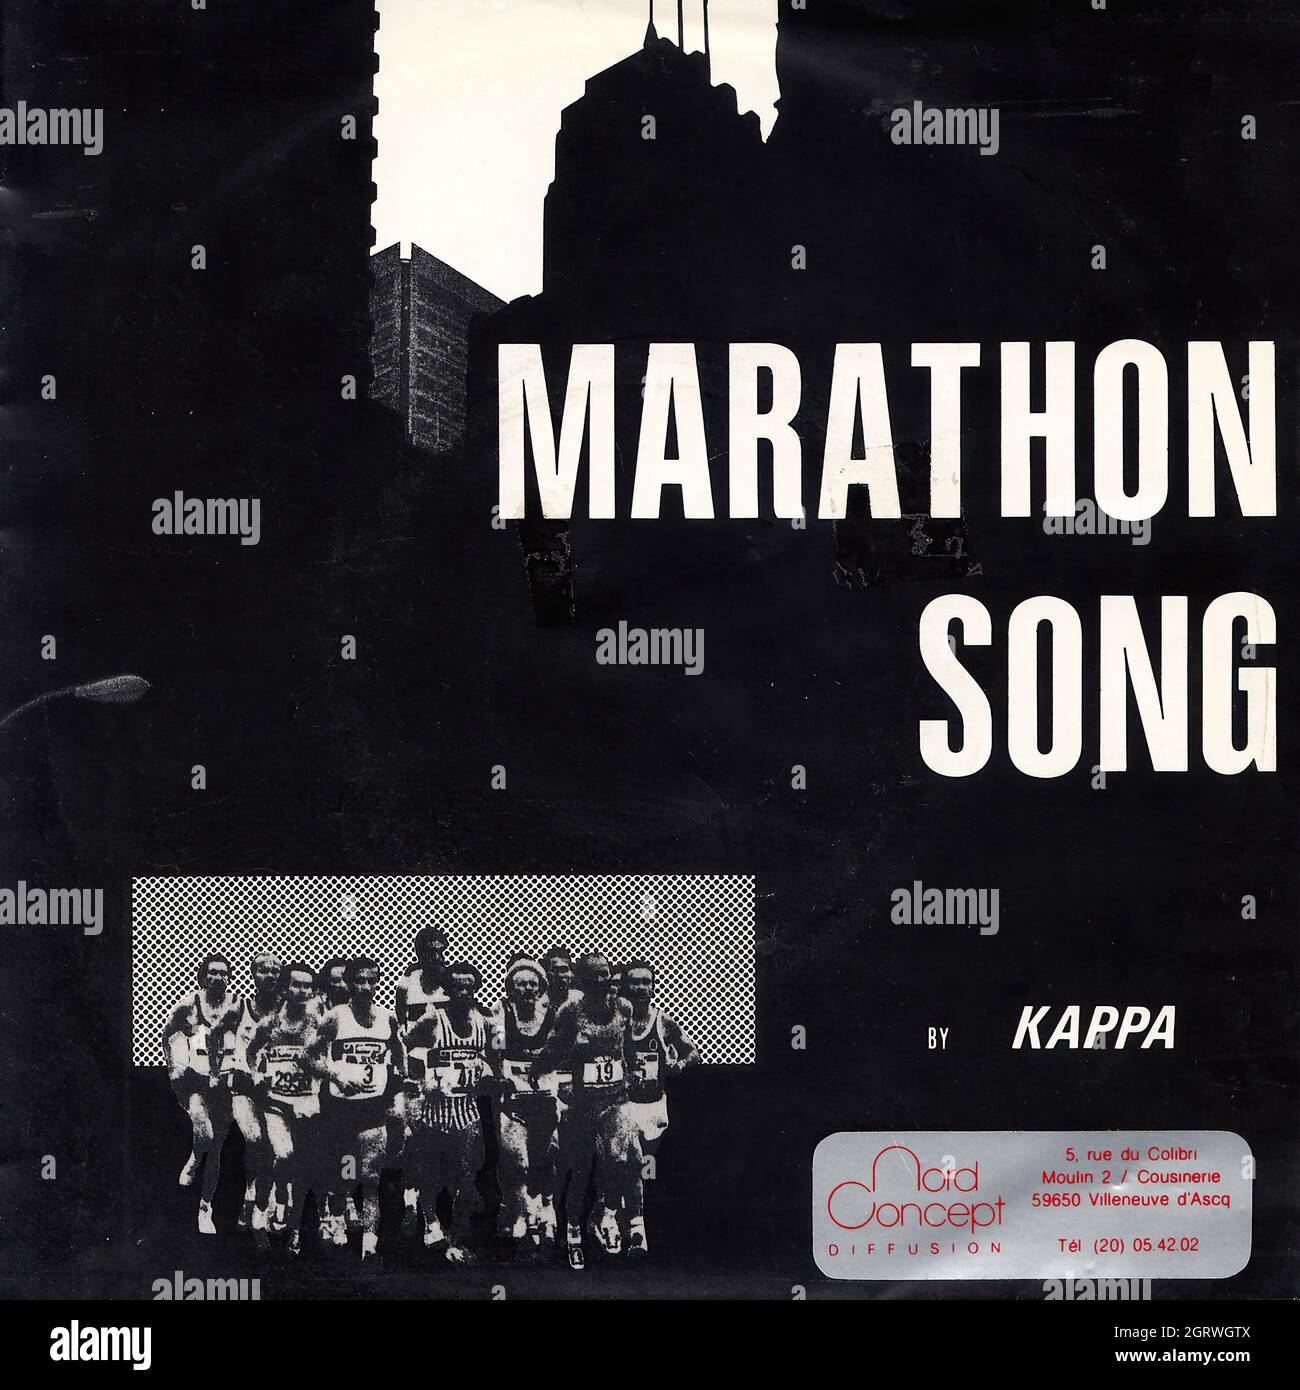 Kappa - Marathon song - Kappa's theme 45rpm - Vintage Vinyl Record Cover Photo - Alamy